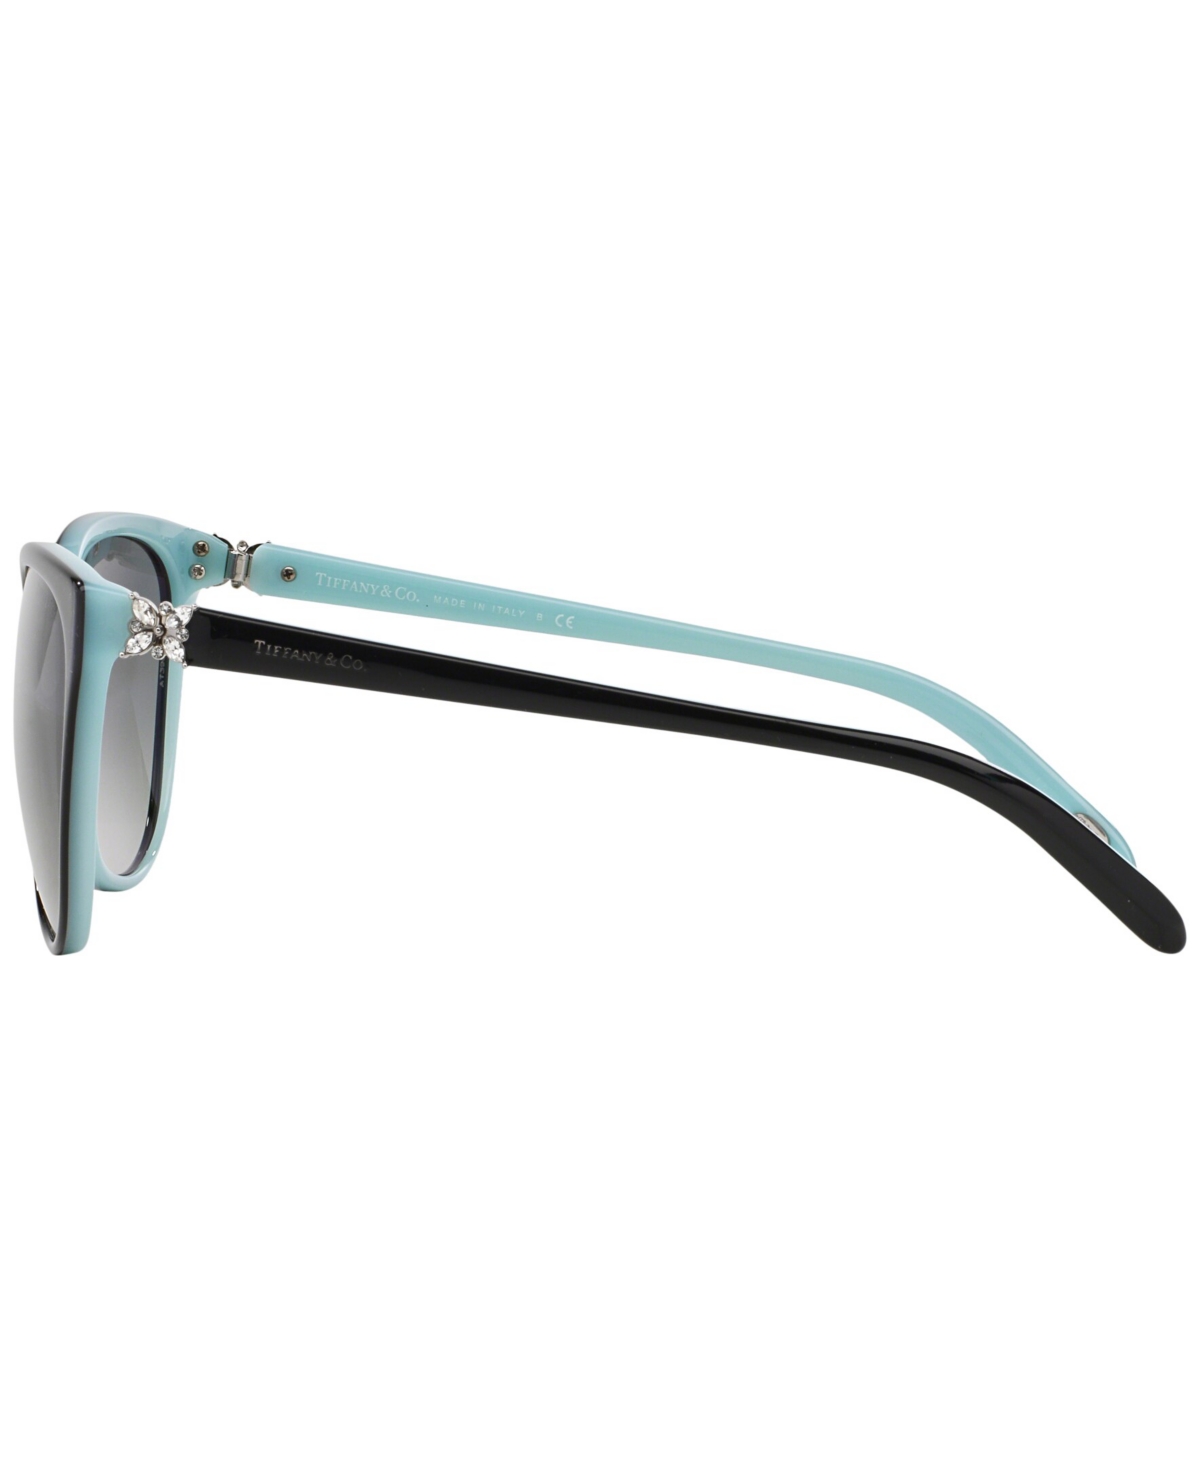 Shop Tiffany & Co Women's Sunglasses, Tf4089b In Black On Tiffany Blue